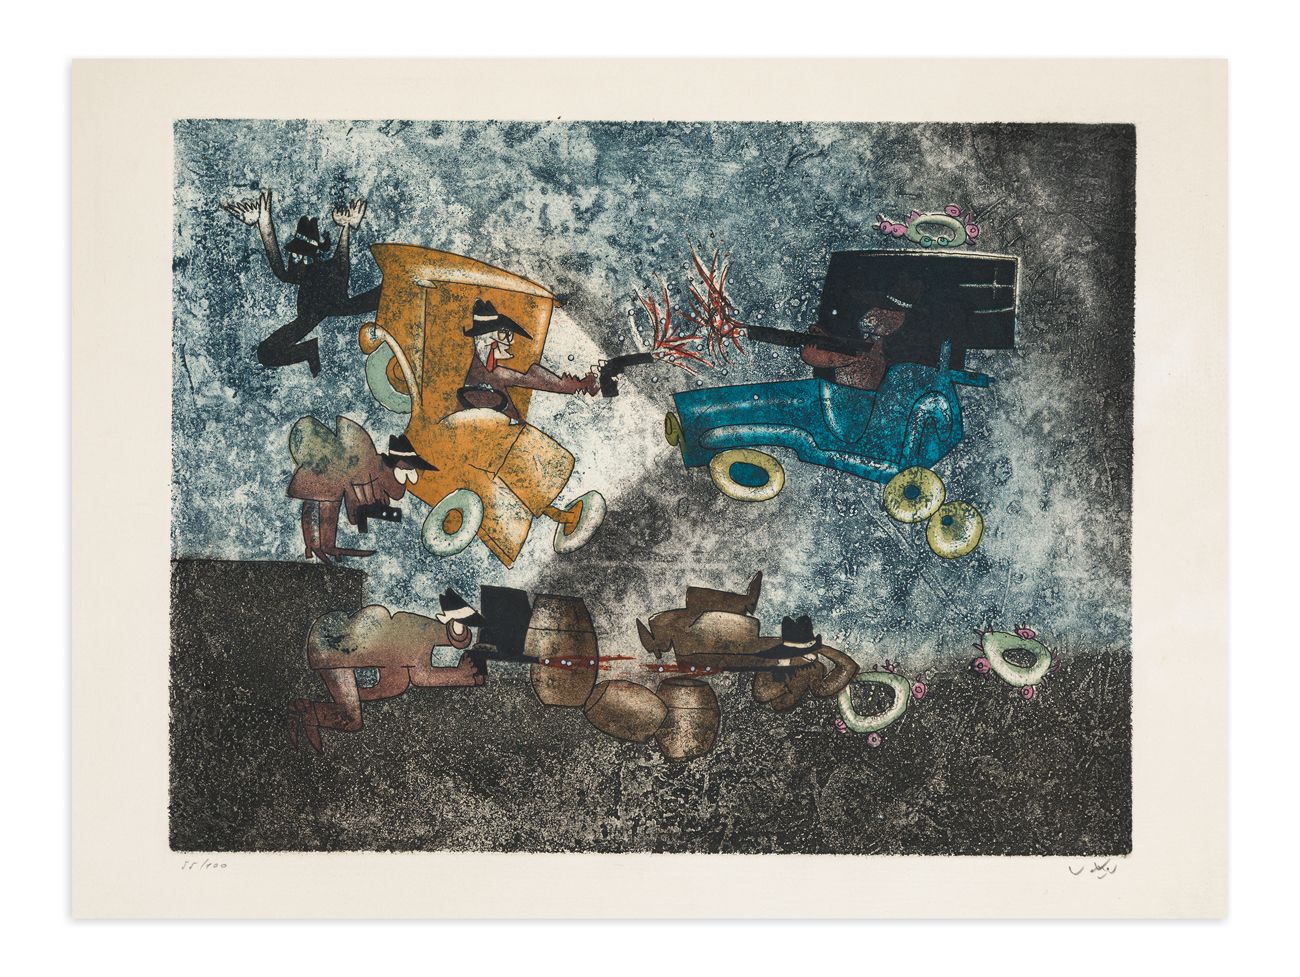 SEBASTIAN MATTA (1911-2002) - Al capone, 1974 蚀刻和水印

片面的37.5x49厘米

板材45x60厘米

正面&hellip;